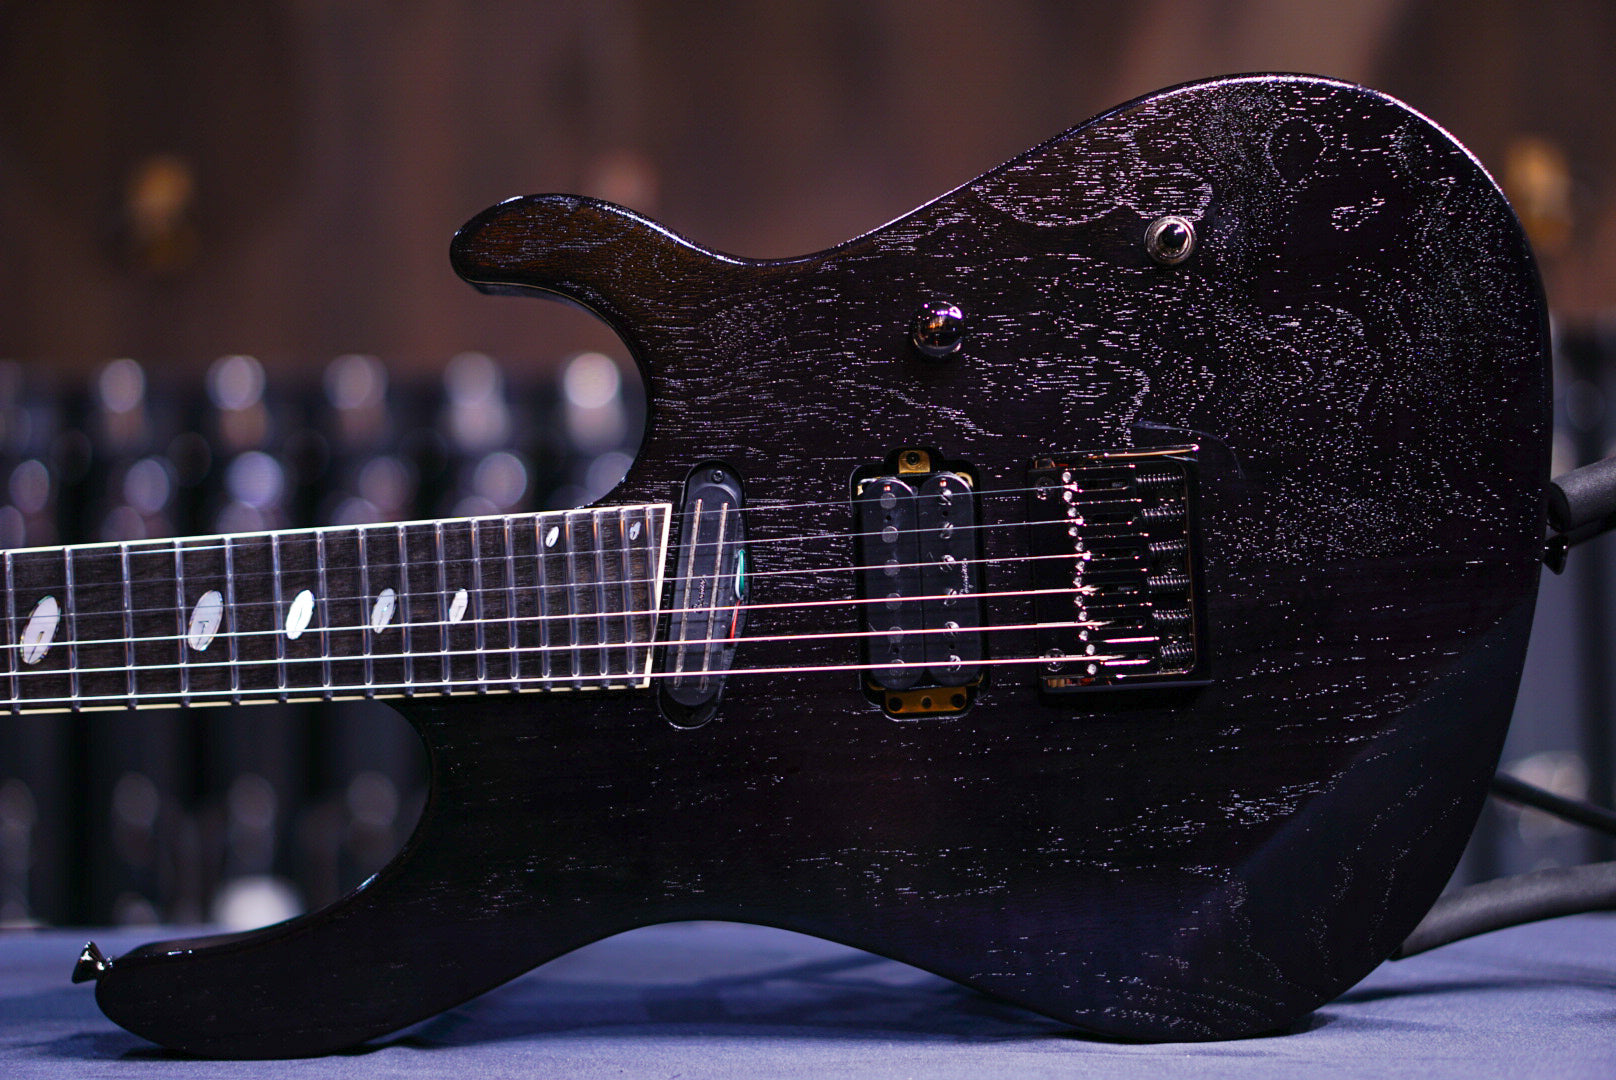 Caparison Horus WB FX EF Trans charcoal black 3370142 - HIENDGUITAR   Caparison Guitars